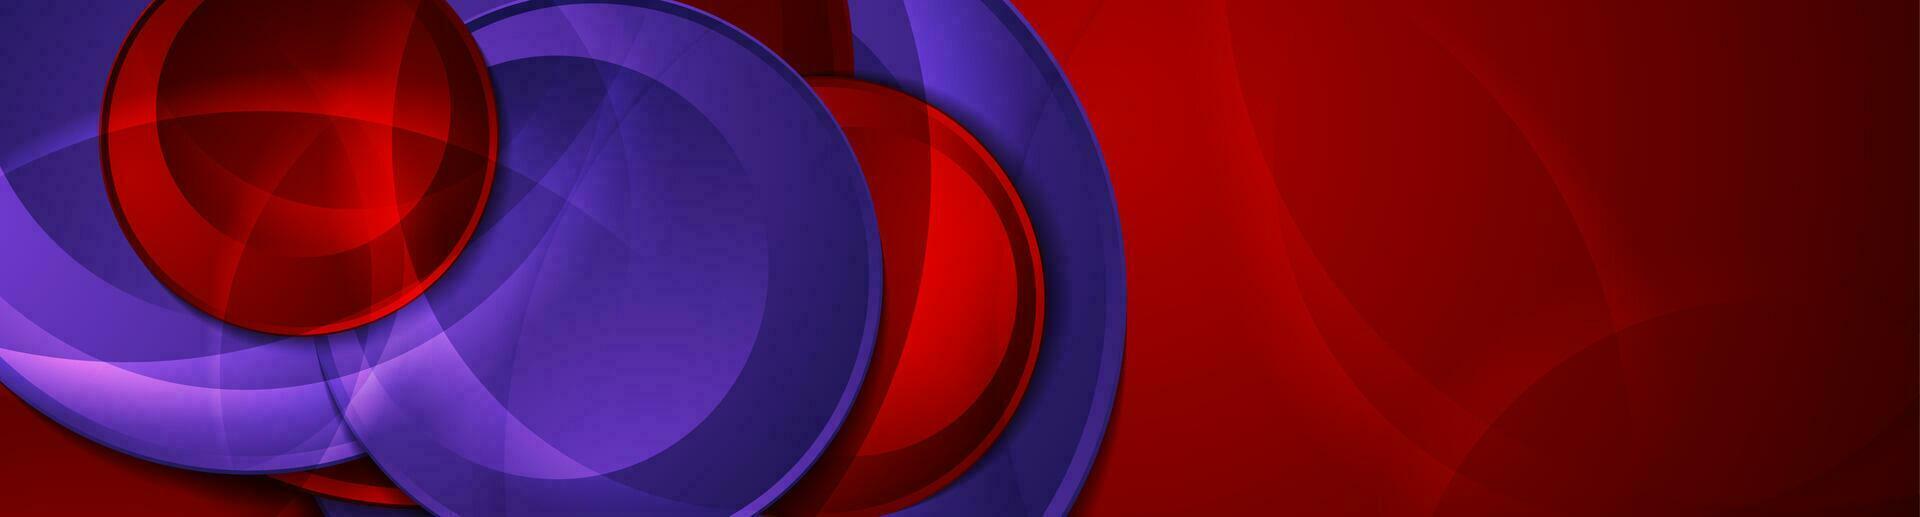 hoch Kontrast rot violett abstrakt Technik korporativ Banner Design vektor